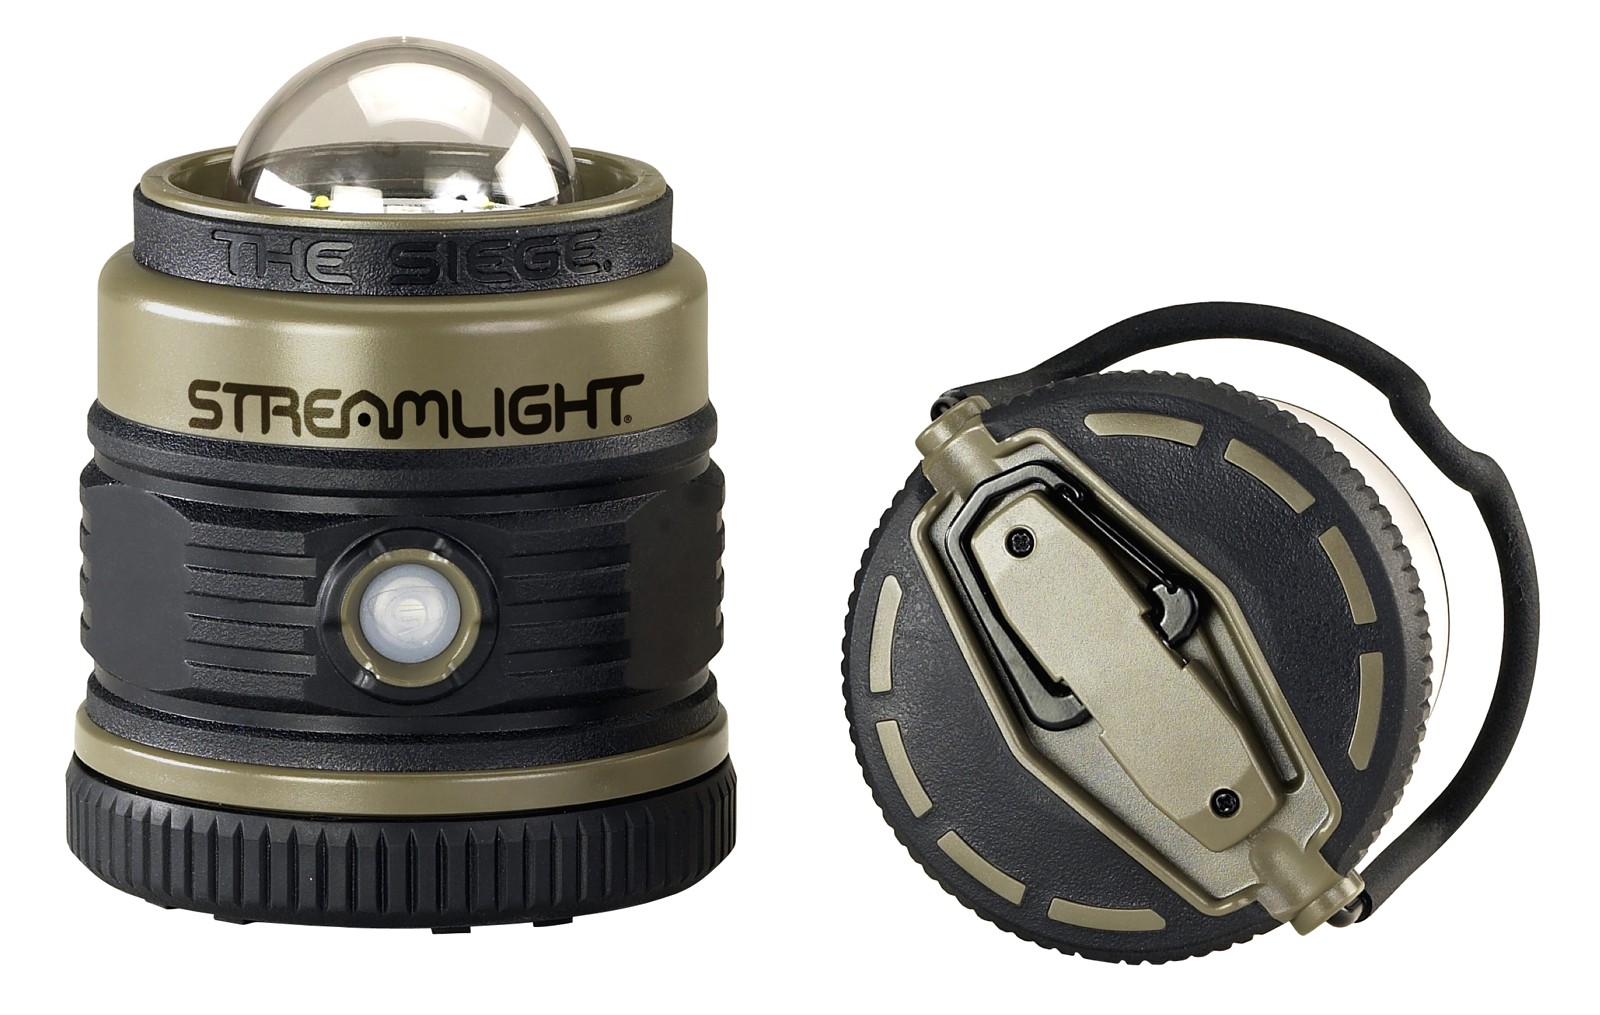 Кемпинговый фонарь на алкалайновых батареях Siege® Фото 4